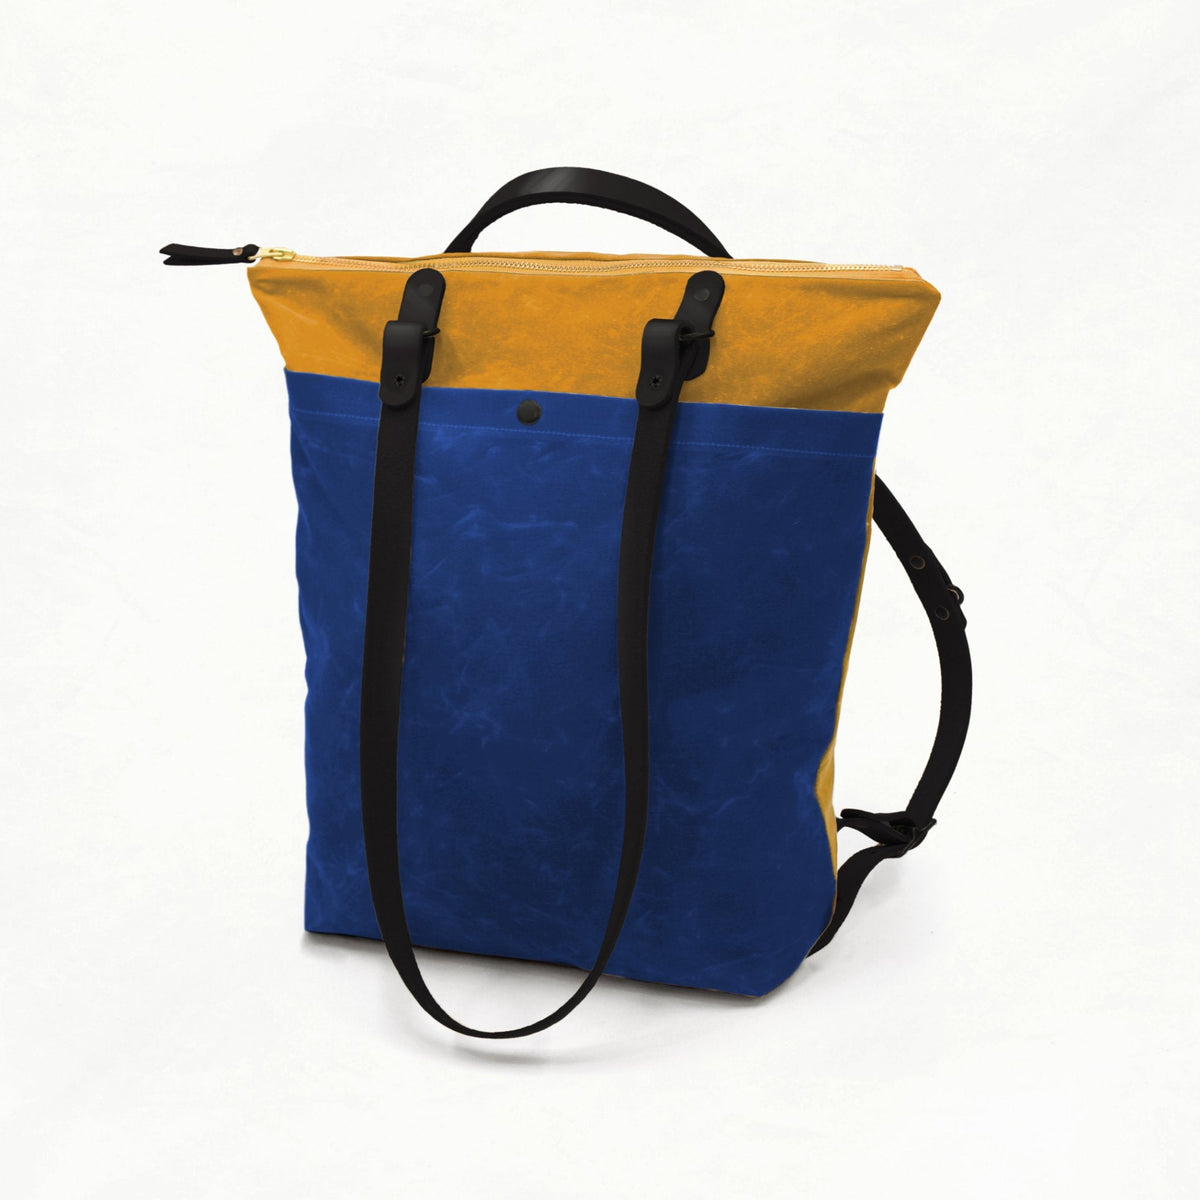 Maywood - Mustard Bag Maker Kit - MAY - MUS - COB - BLA - BLA - MUS - Maker Kit - Klum House